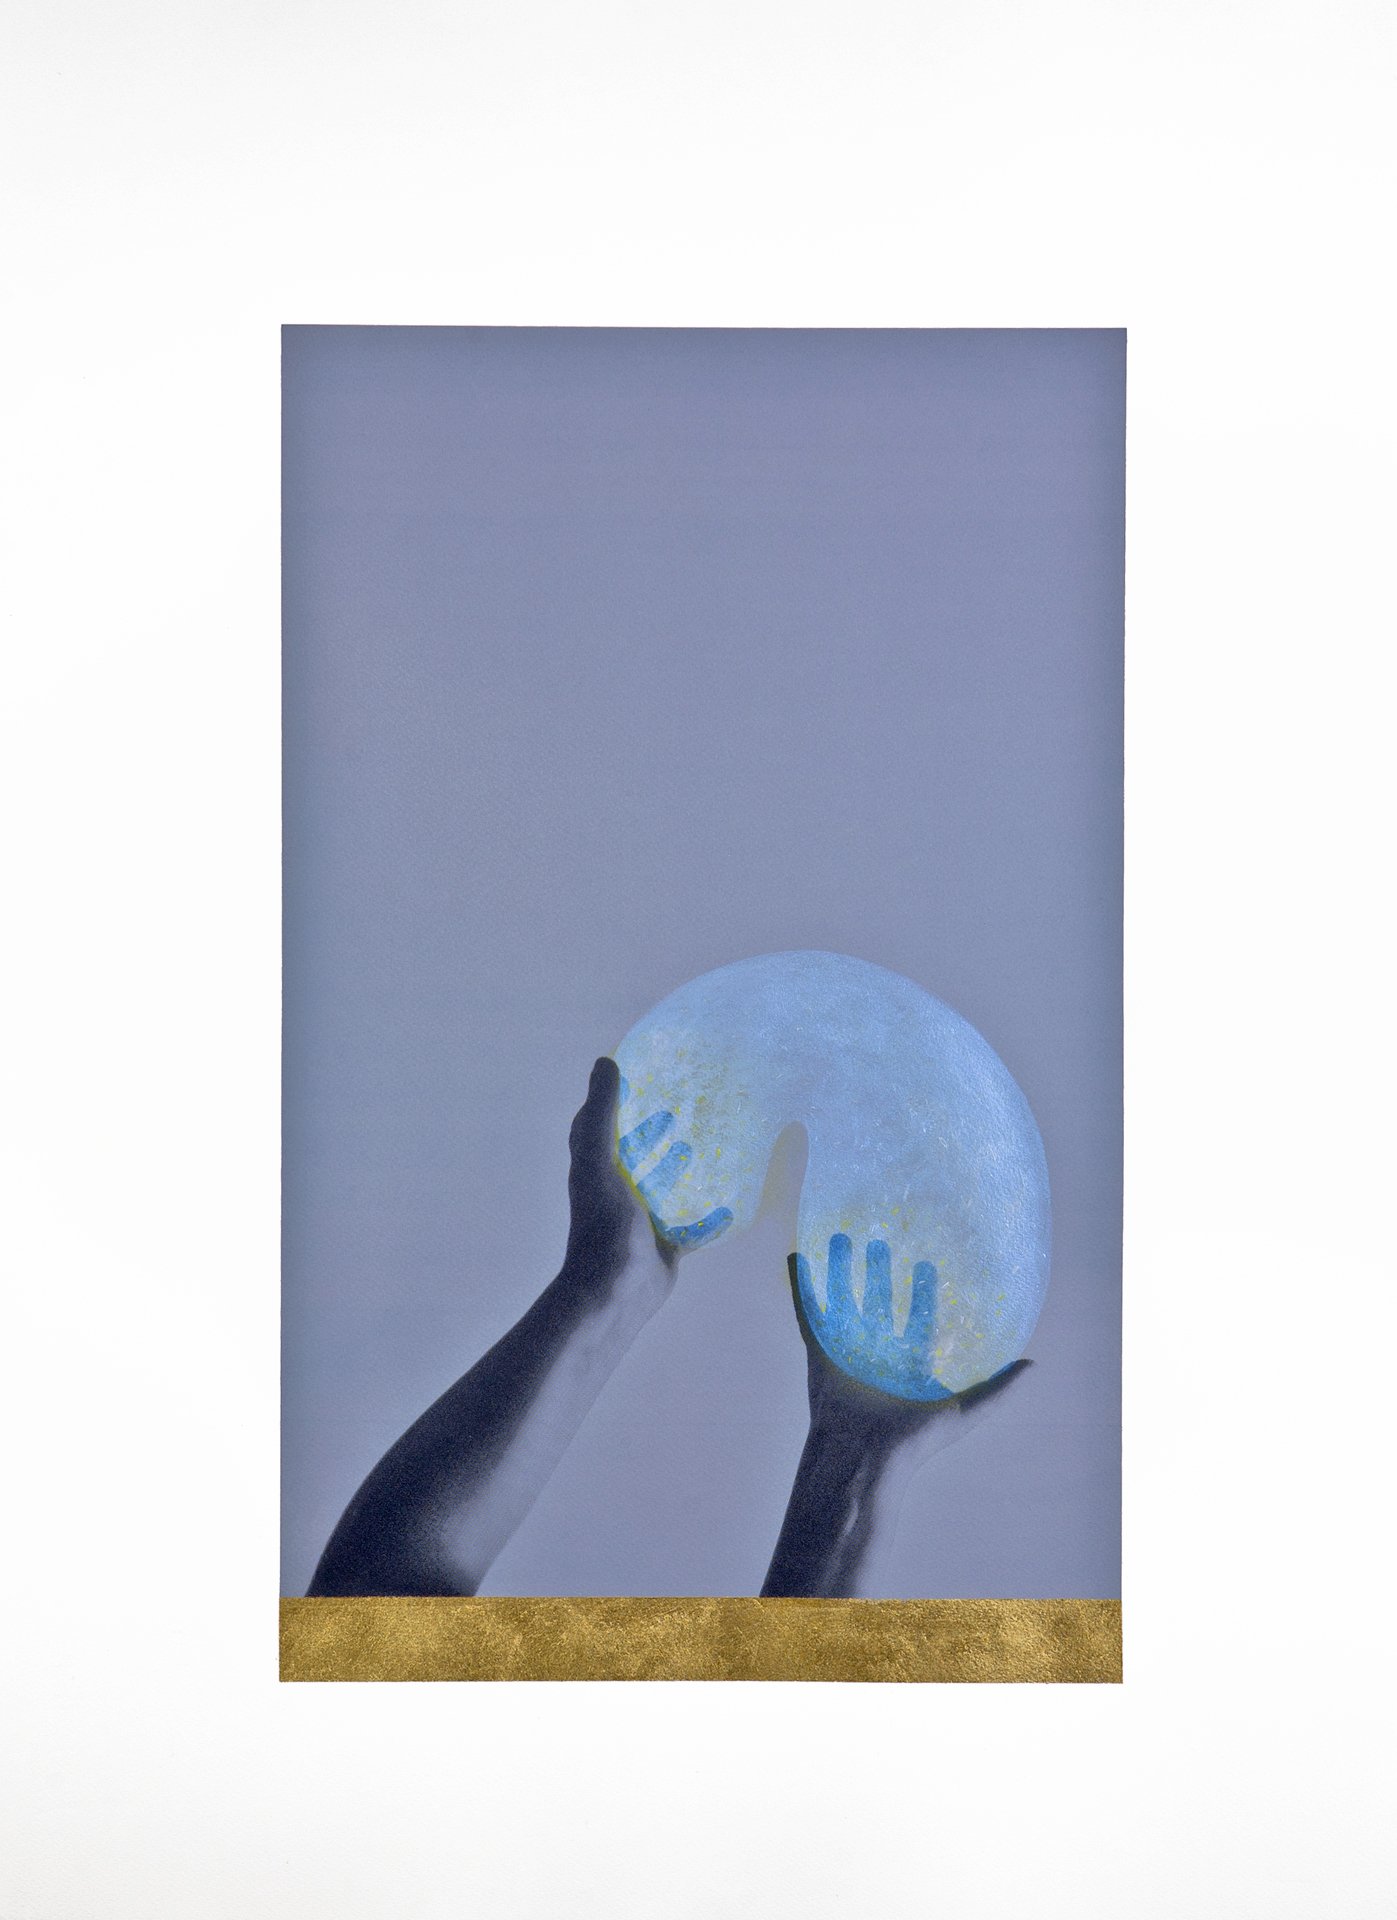    Cultivating No. 12  , 2012, silkscreen print and mixed media, 76 x 56 cm 